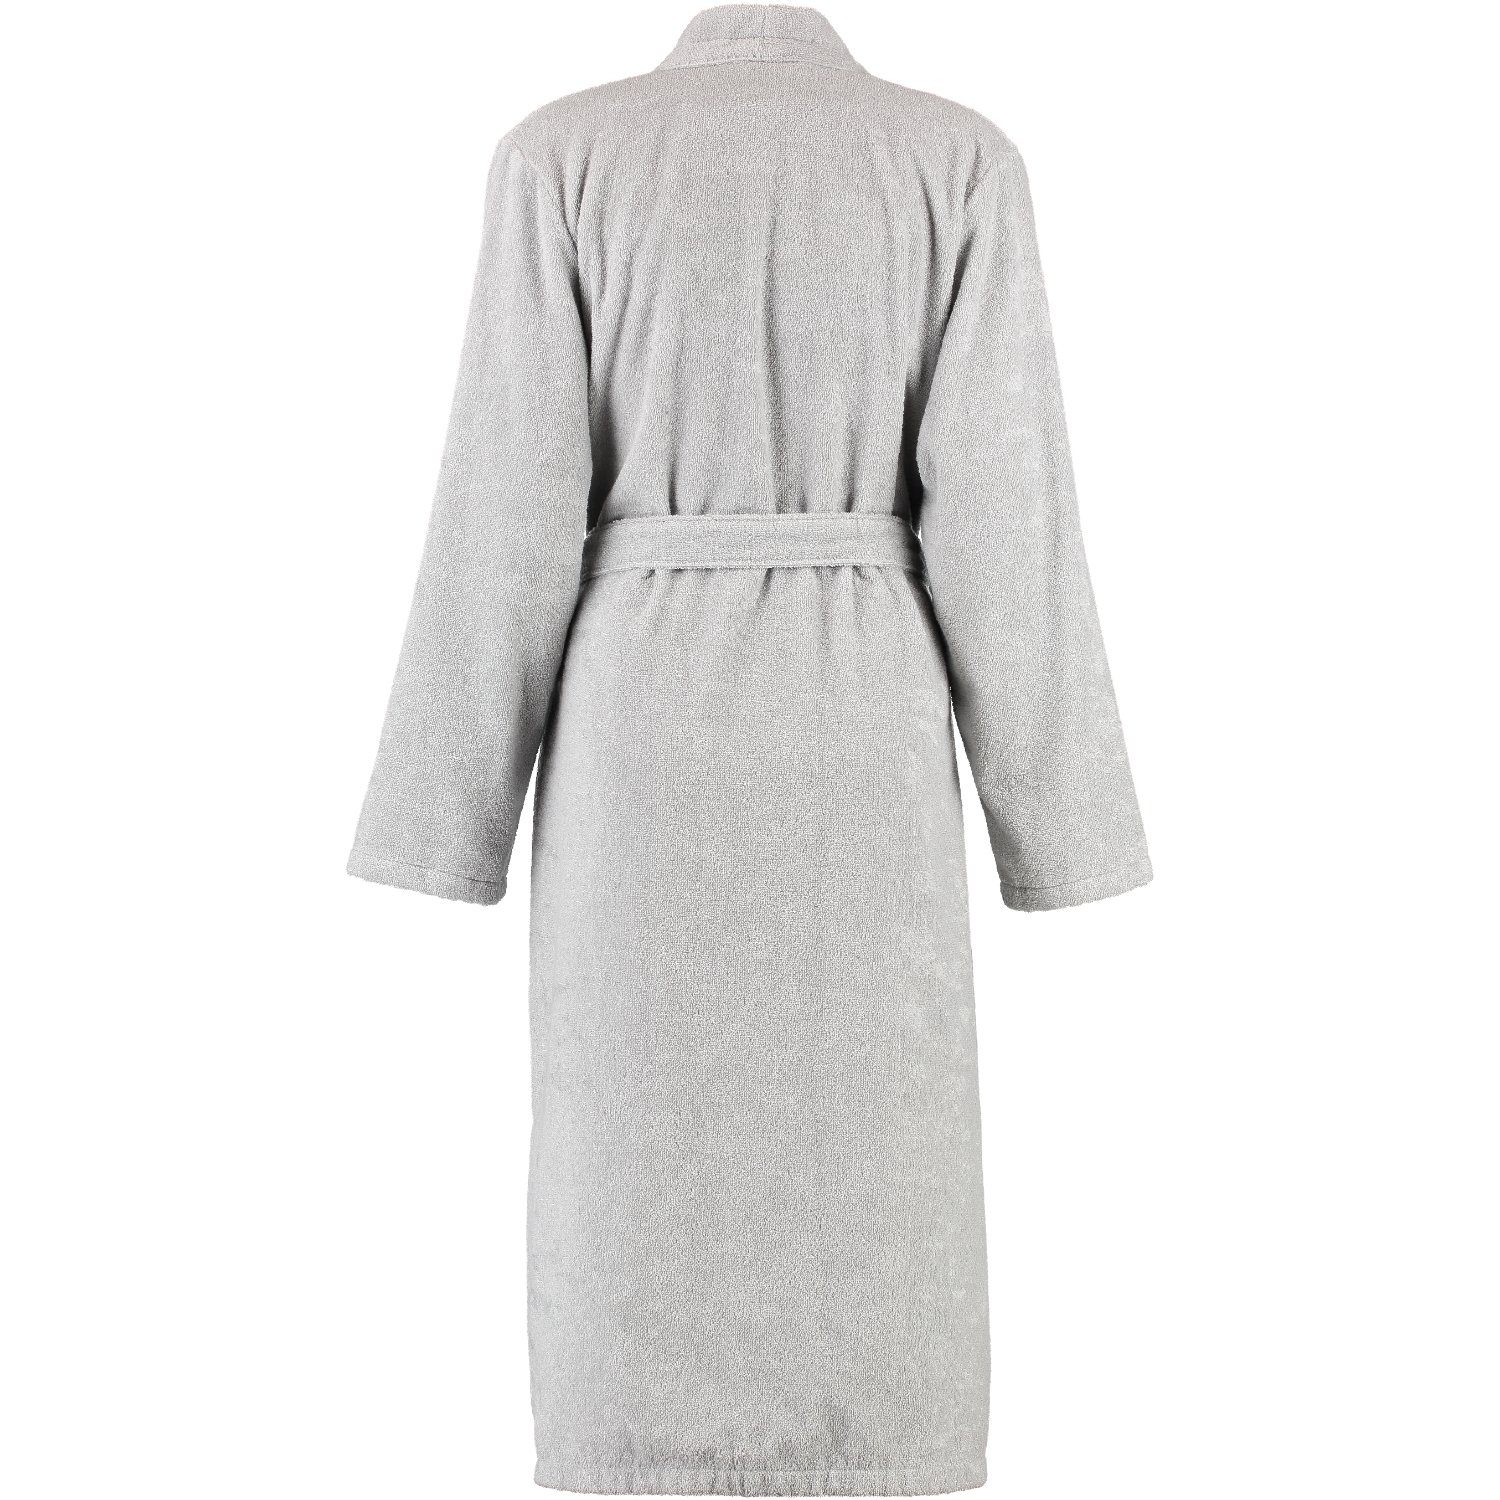 Frottier, 1616 Classic Kimono, 100% Kimono Silber (76) Damenbademantel Baumwolle Joop!